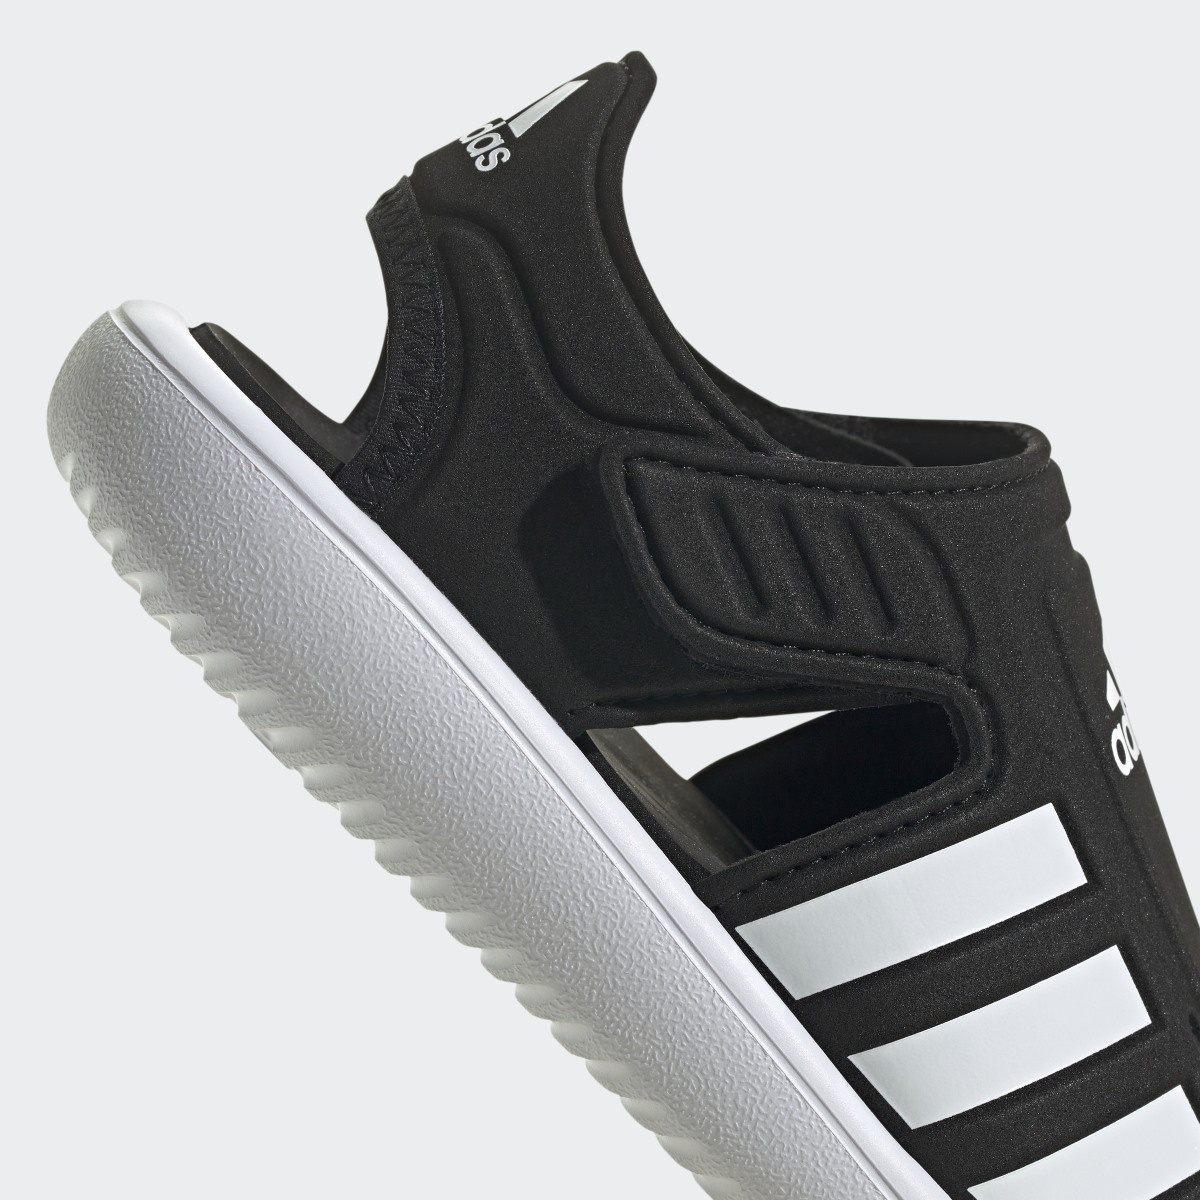 Adidas Summer Closed Toe Water Sandals. 10